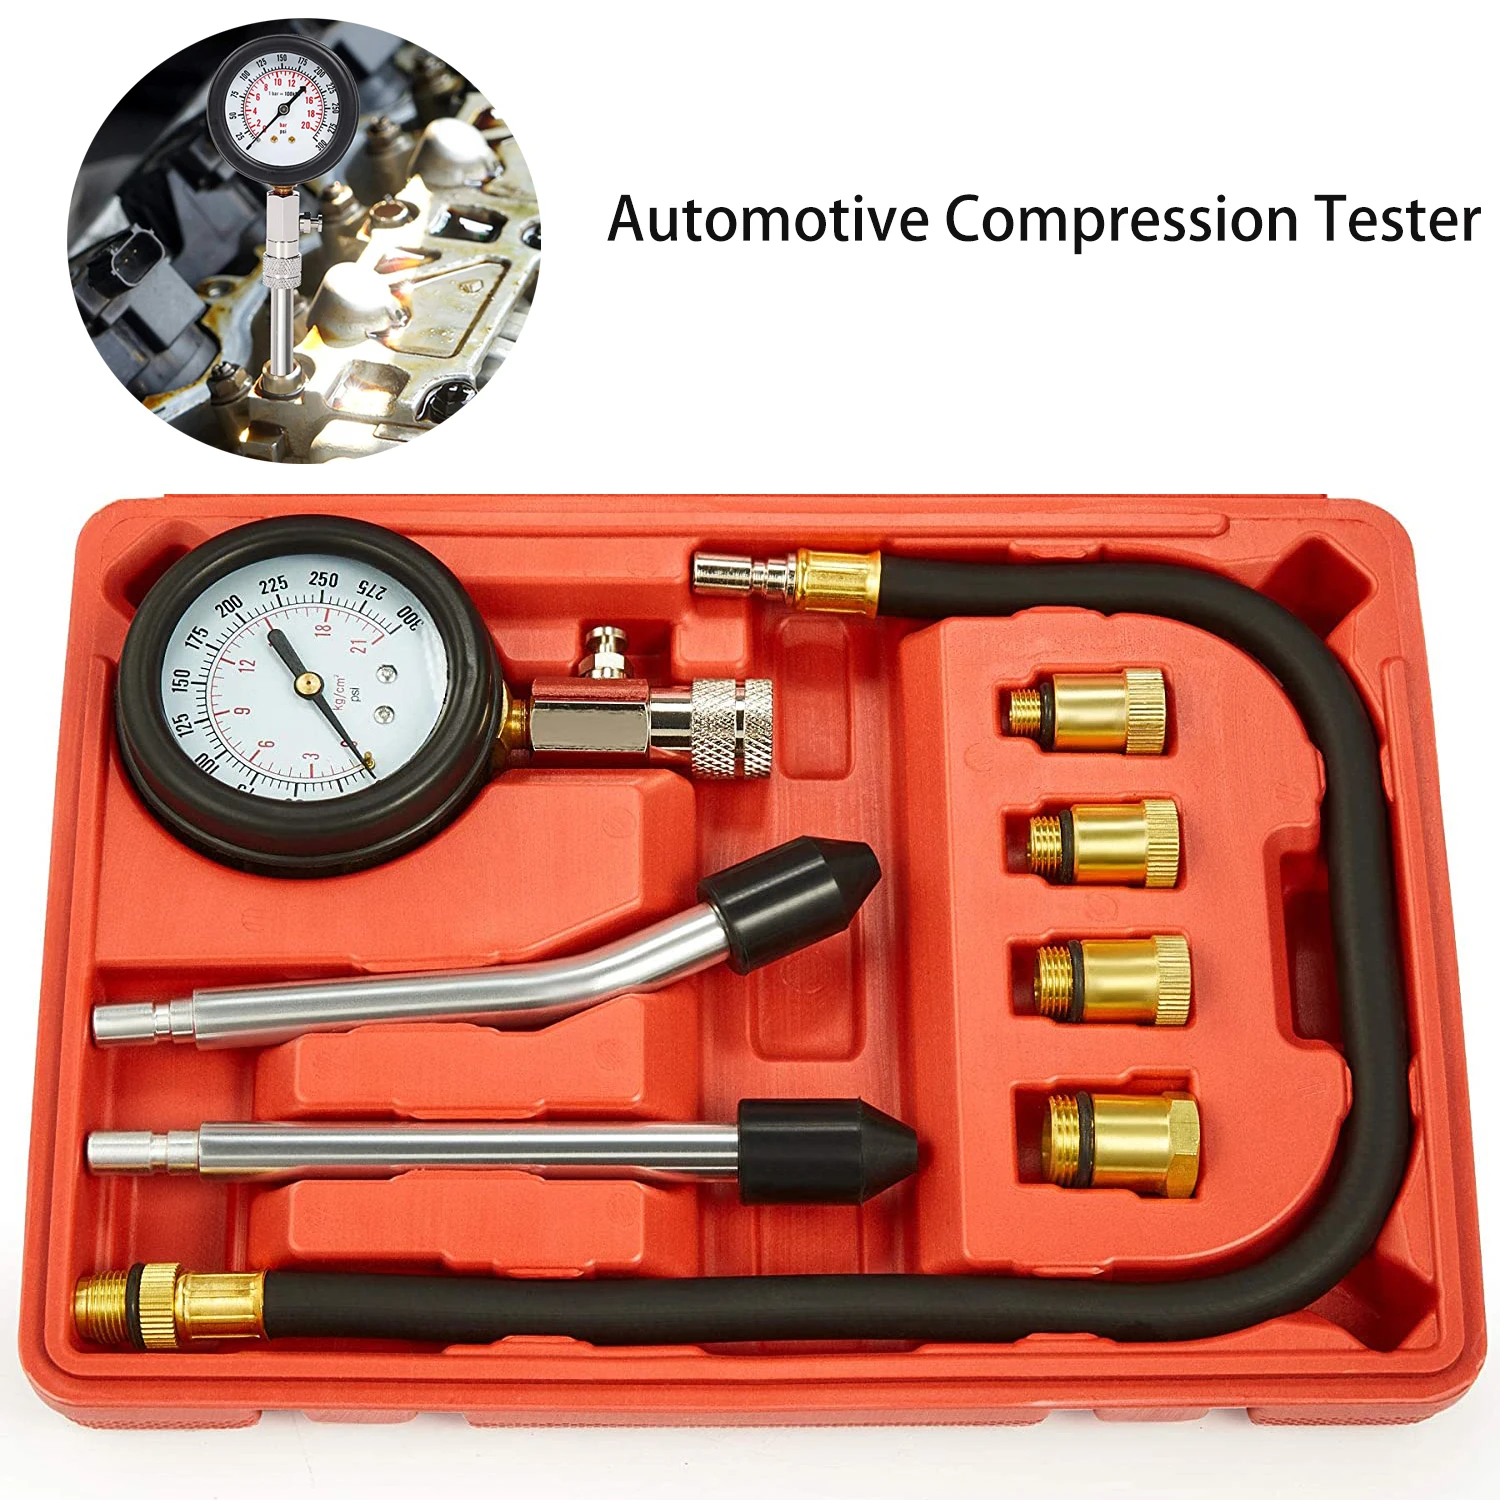 Compression Tester Kit 0-300 PSI Petrol Gas Engine Cylinder Pressure Gauge Automotive Tool for Motorcycle Car Truck